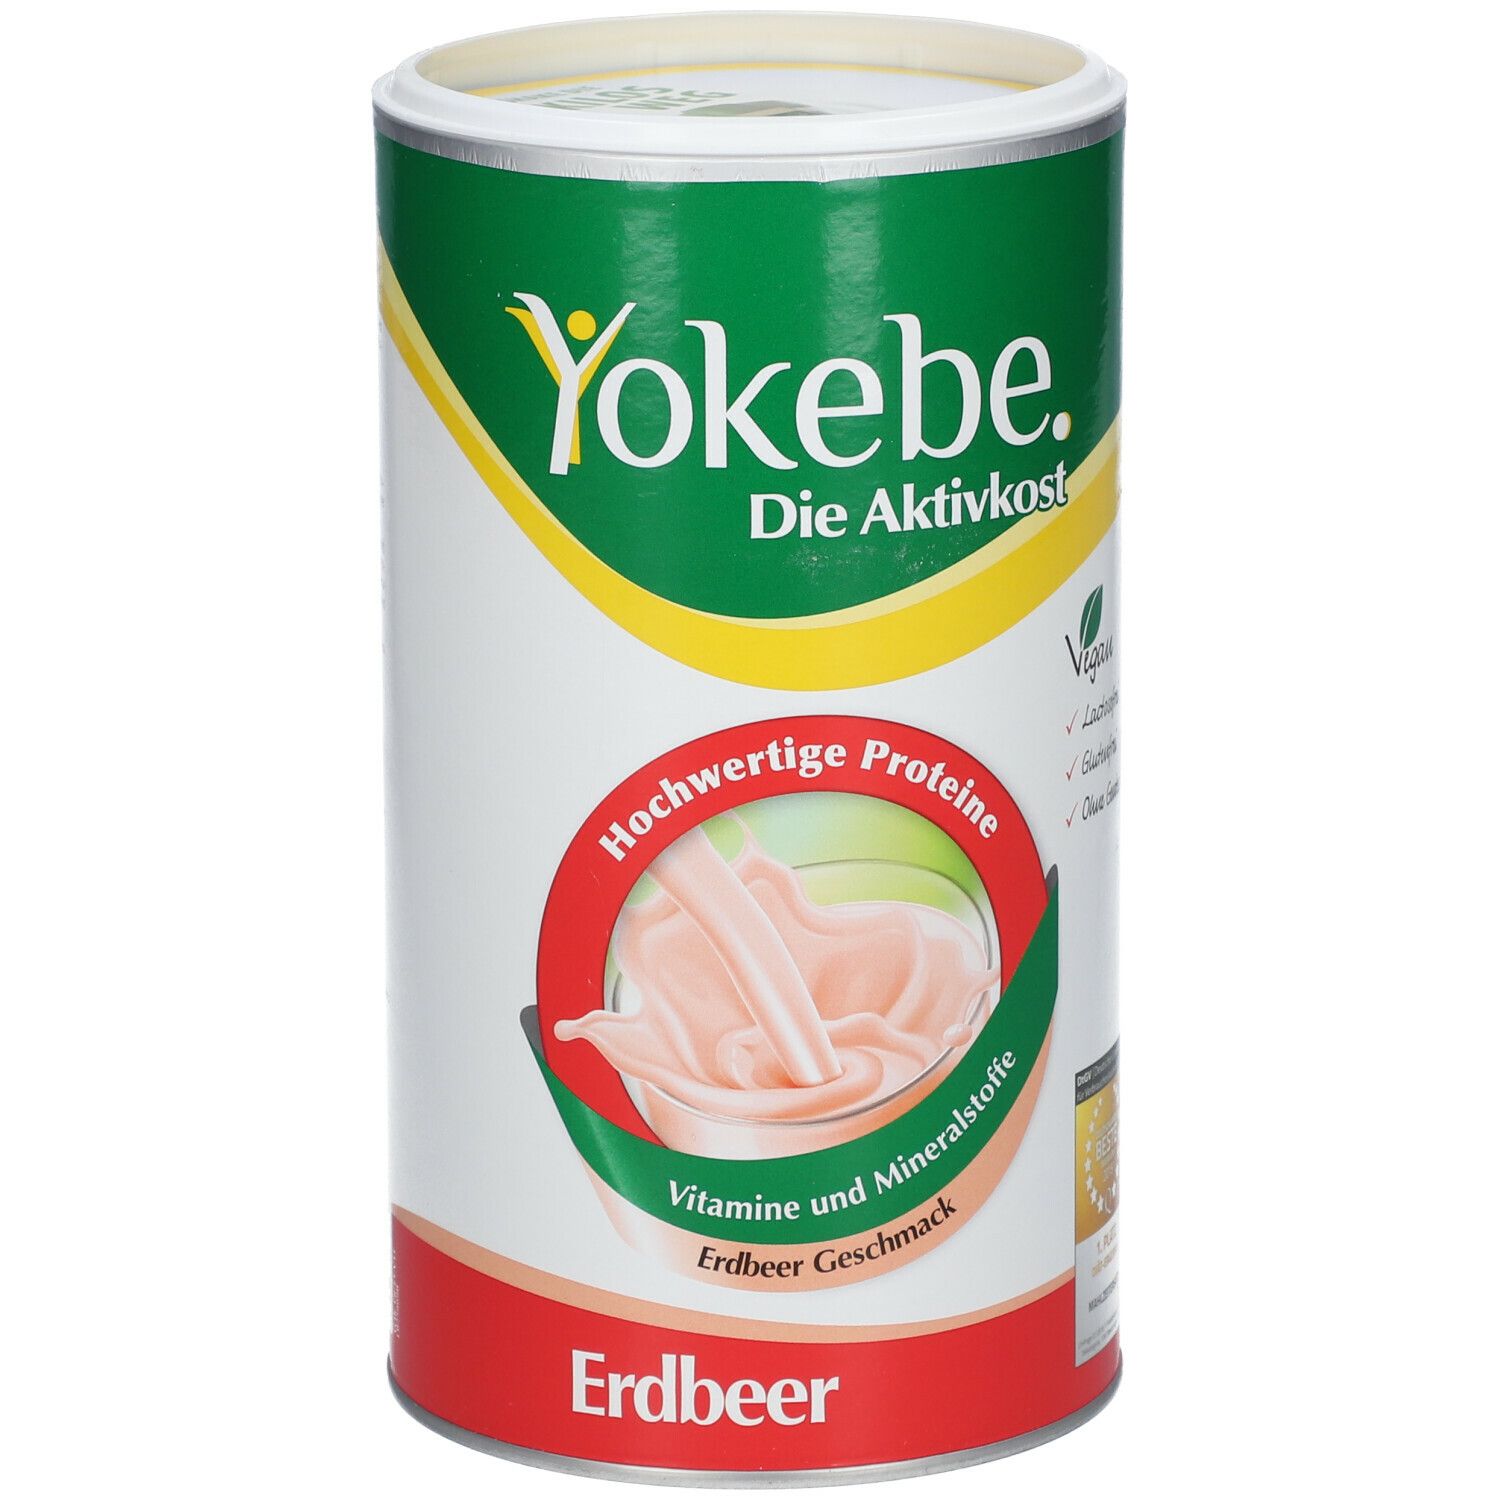 Yokebe Erdbeer, lactosefrei